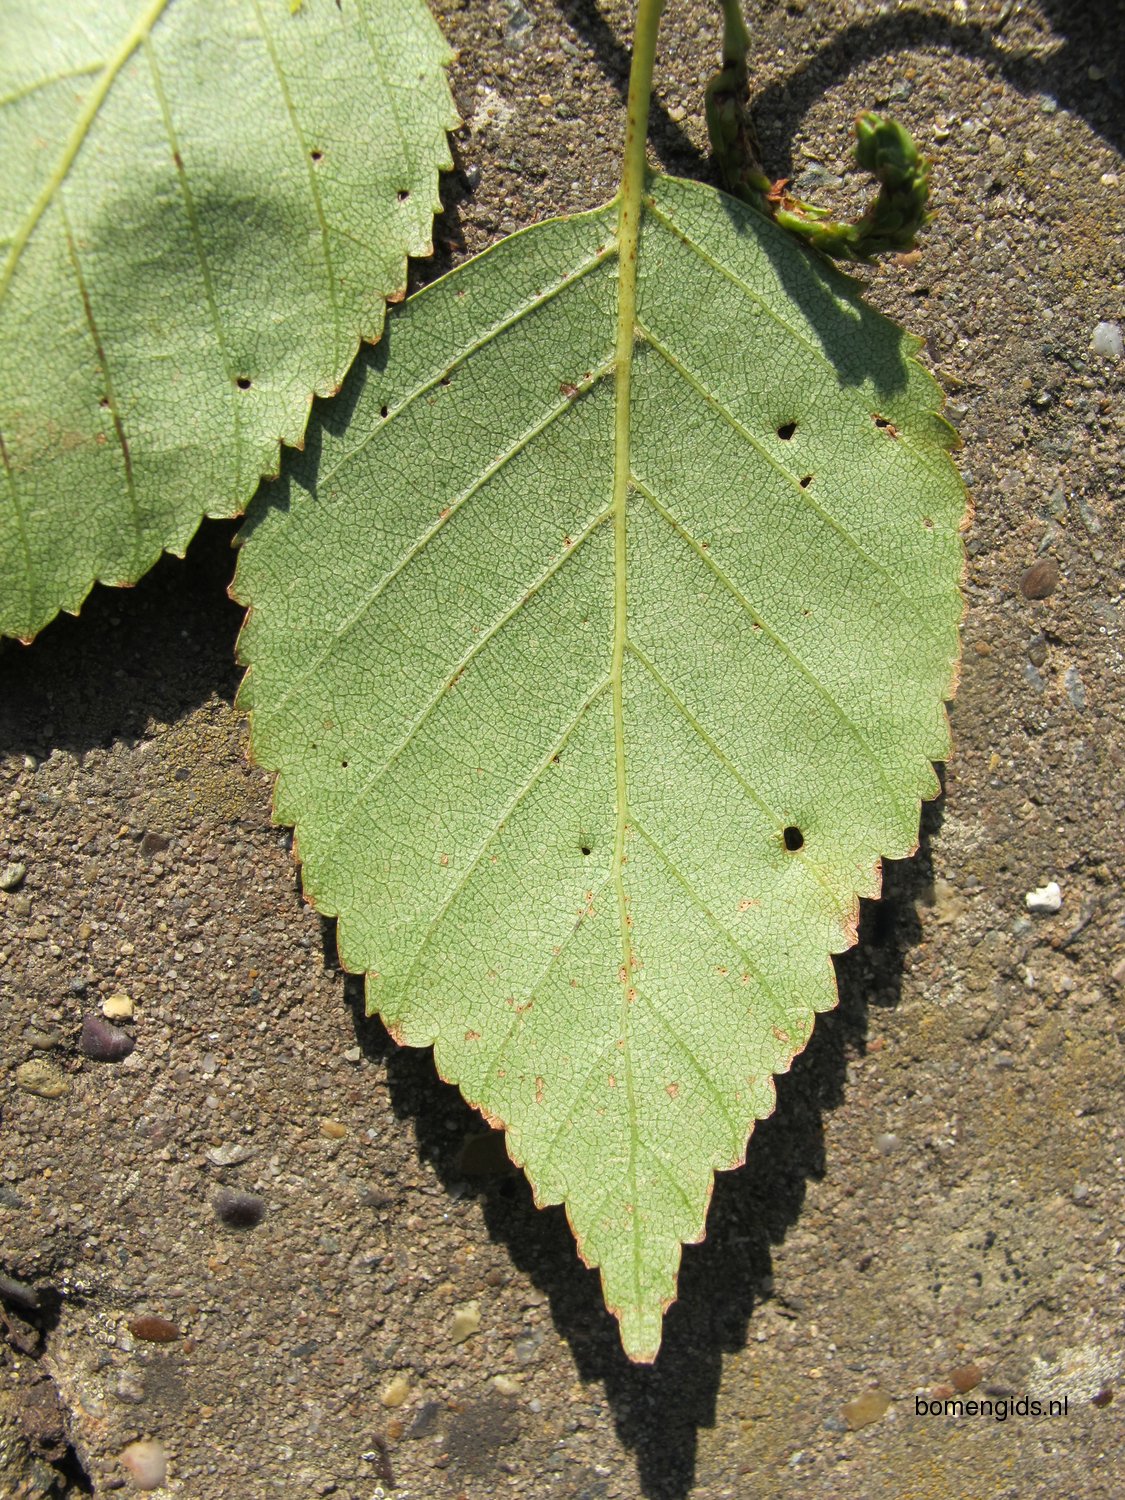 Форма листьев ольха. Ulmus rubra.